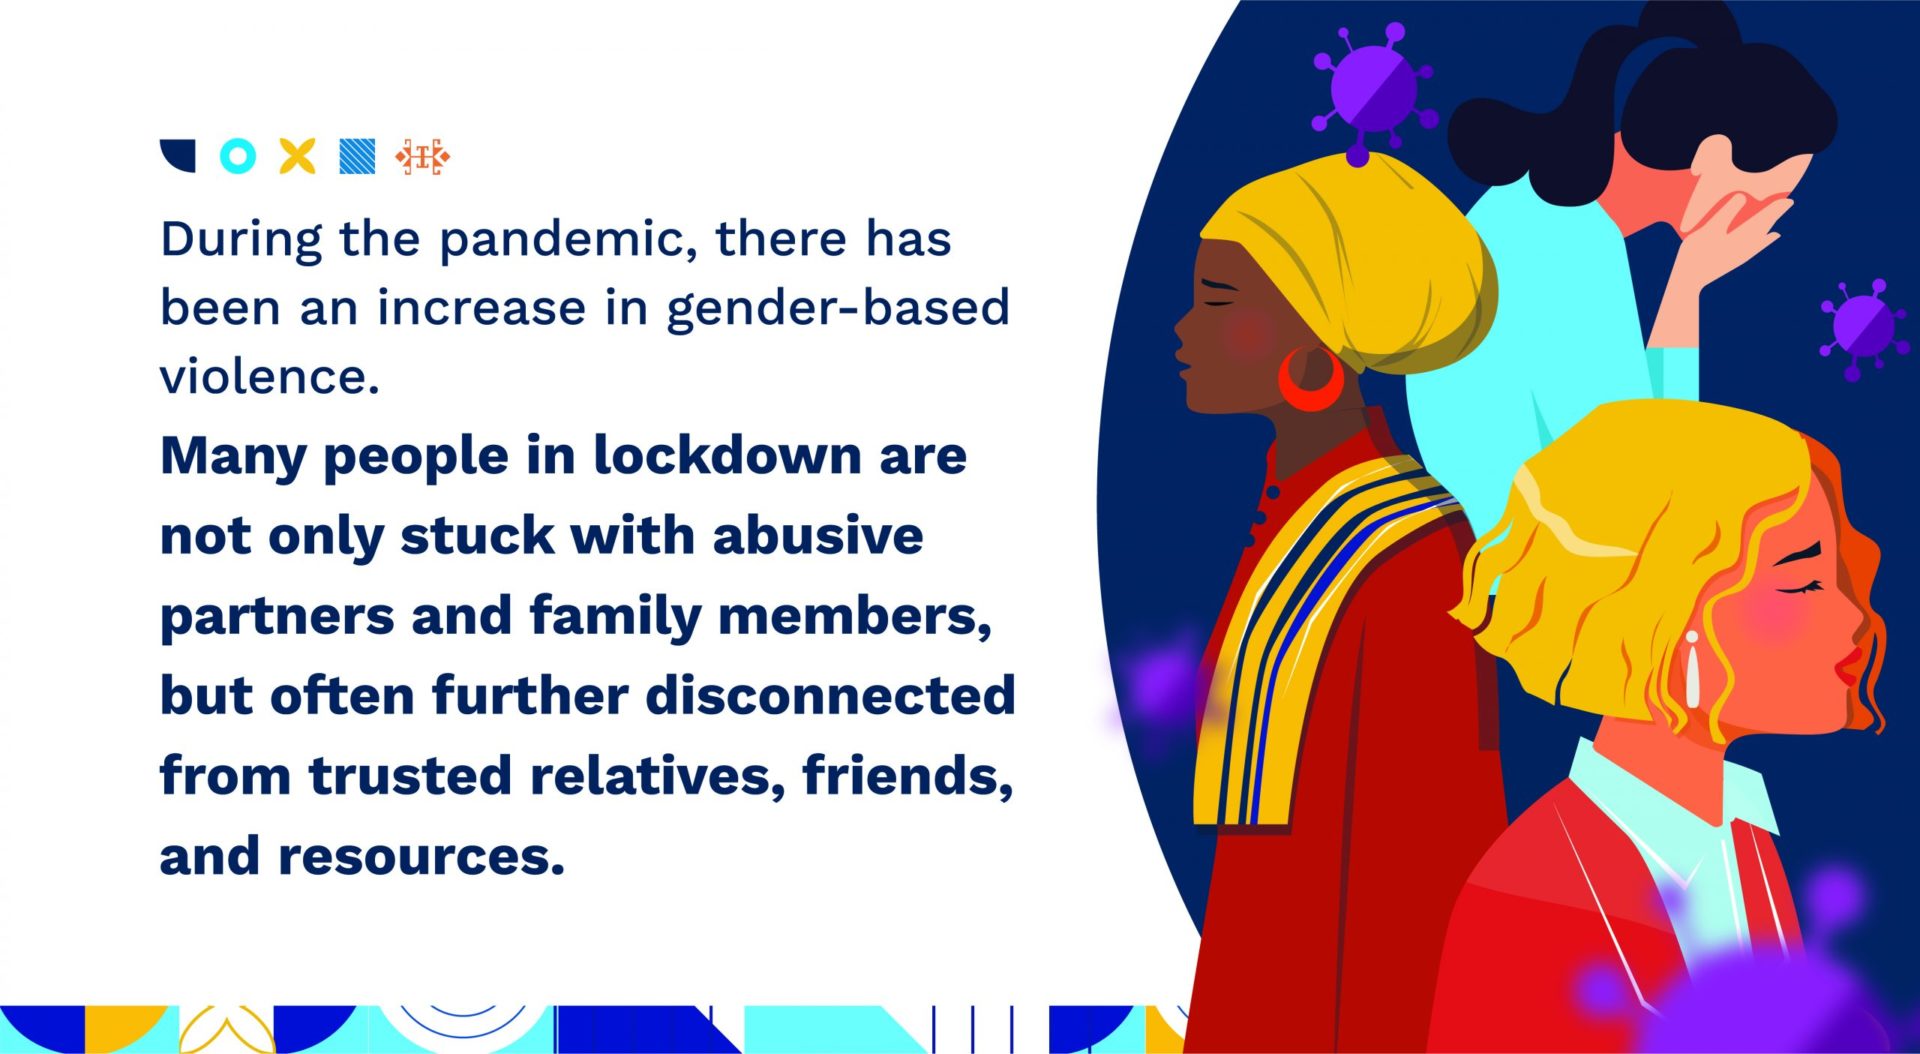 Vulnerable Groups and COVID-19: Gender-Based Violence